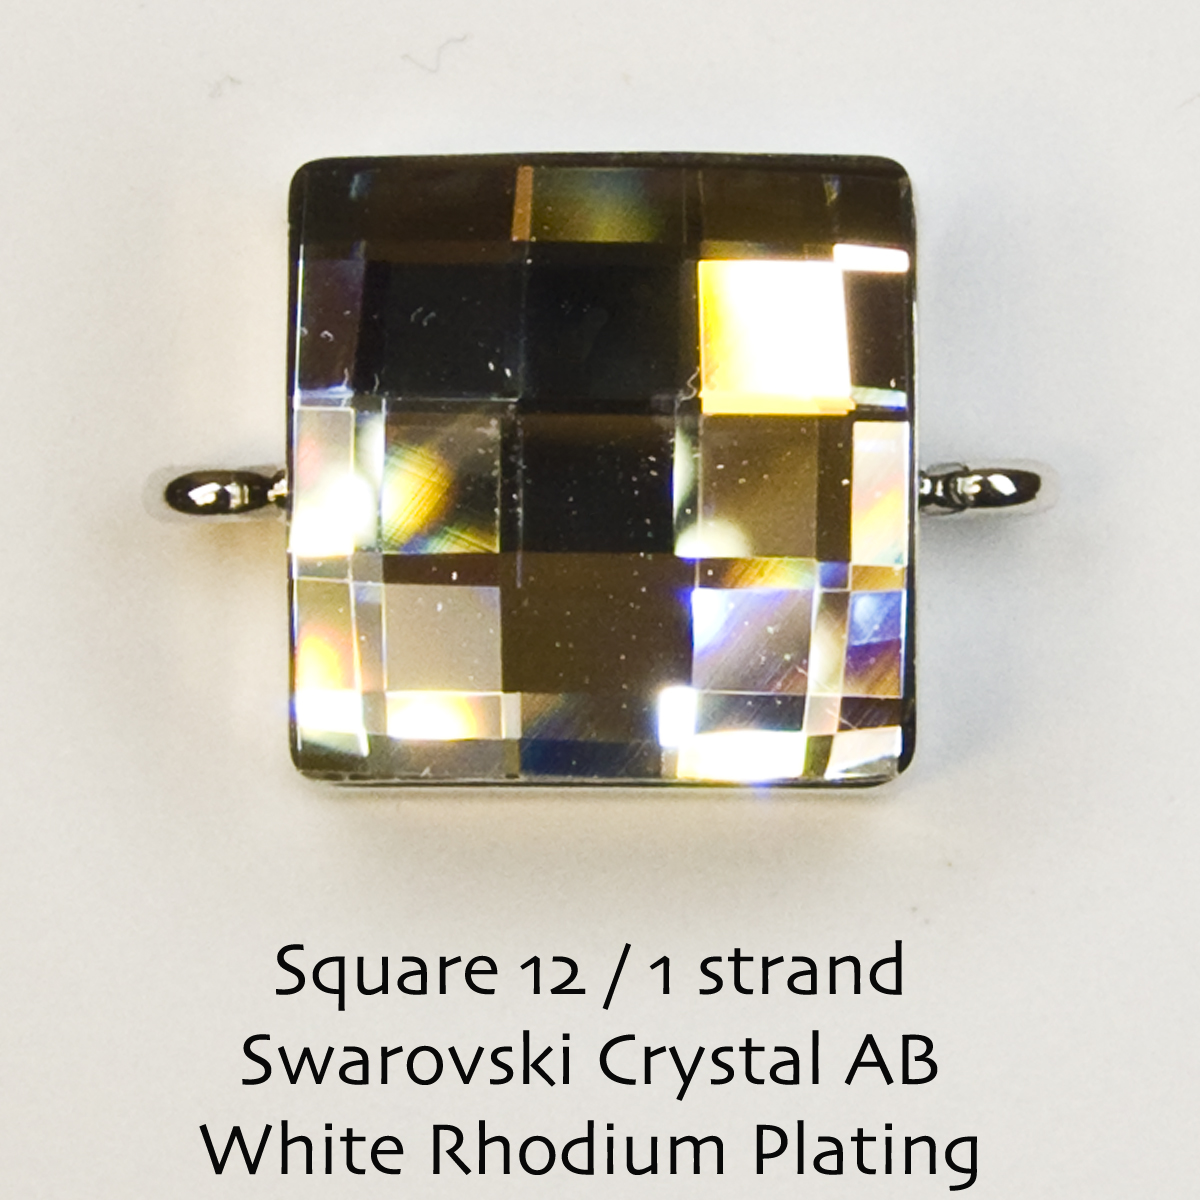 Square12 / Swarovski Crystal - Click Image to Close